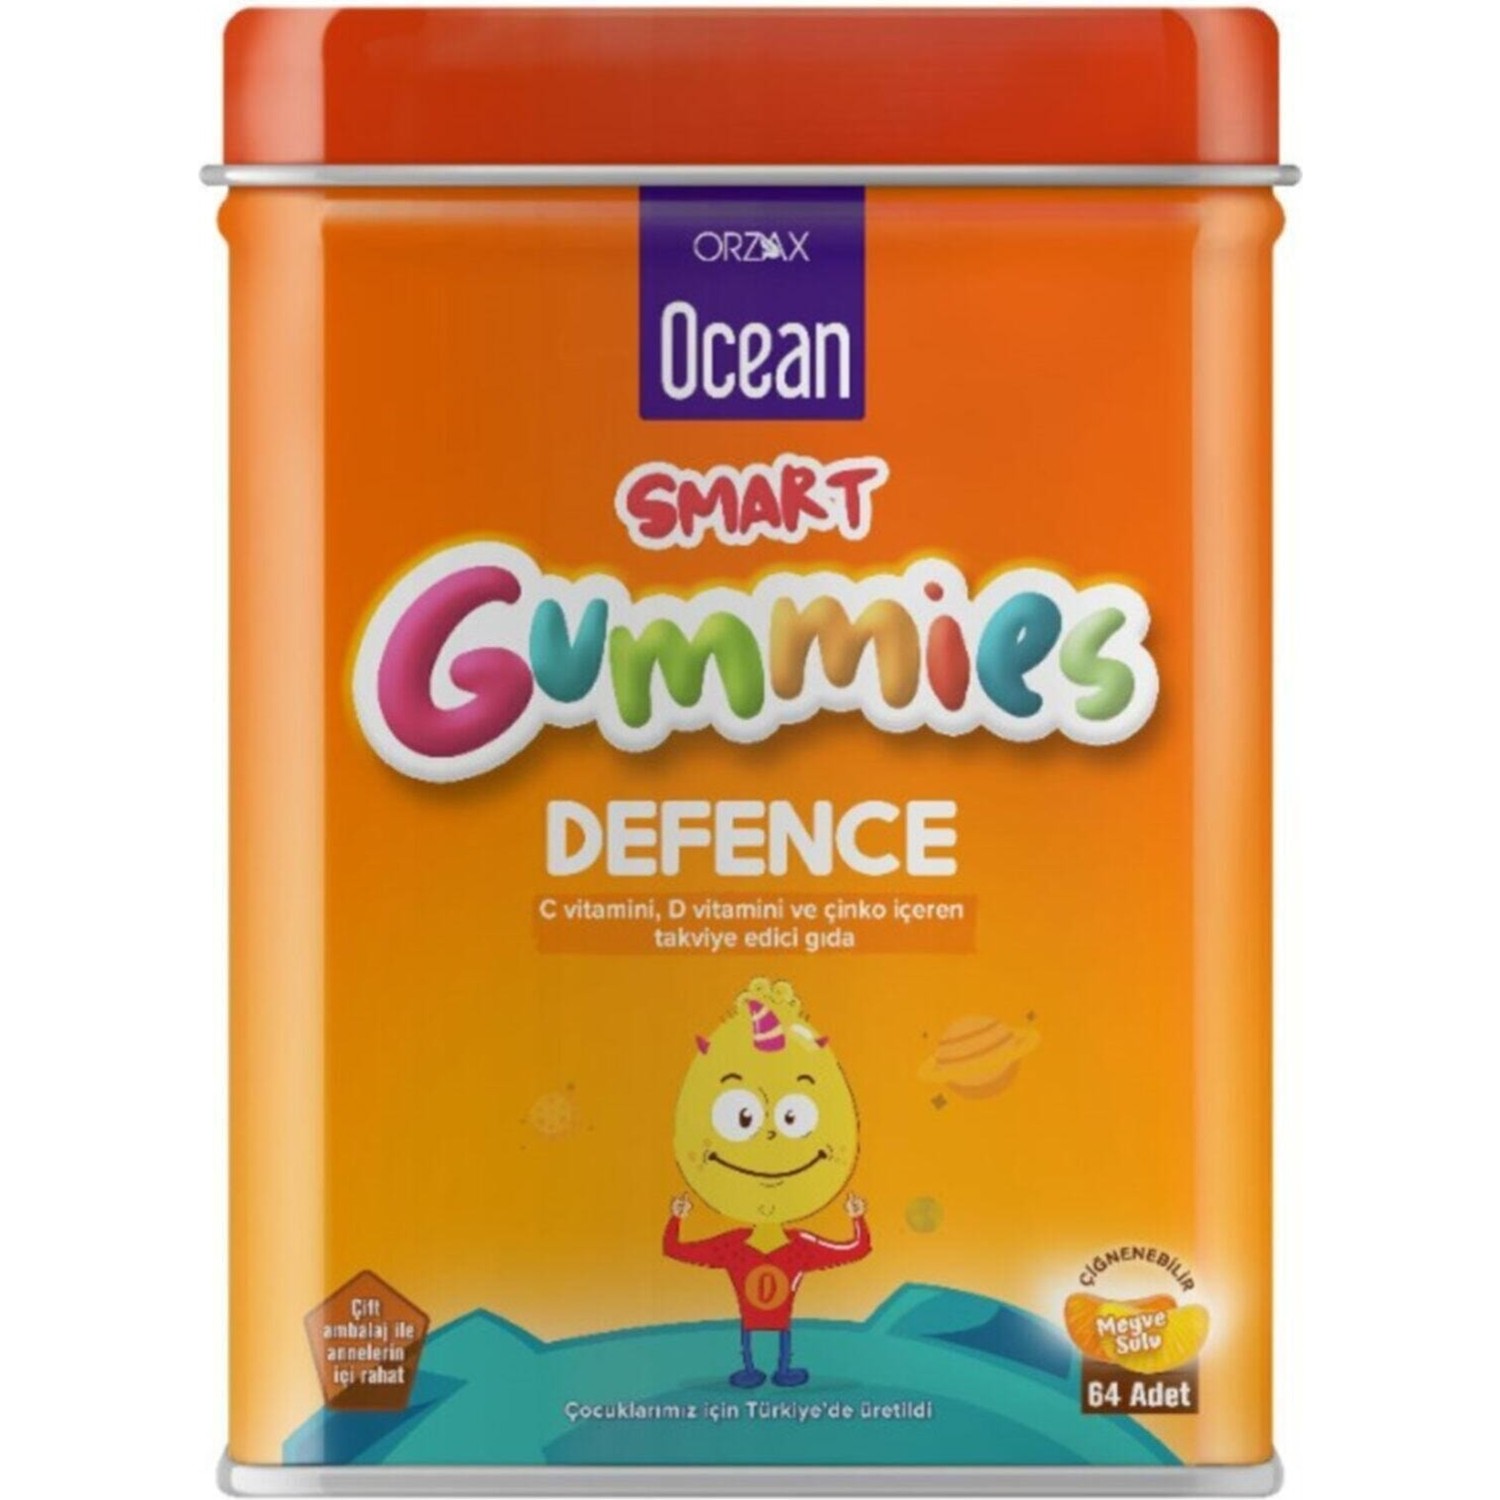 Пищевая добавка Ocean Smart Gummies Defense Cigneme, 64 таблетки